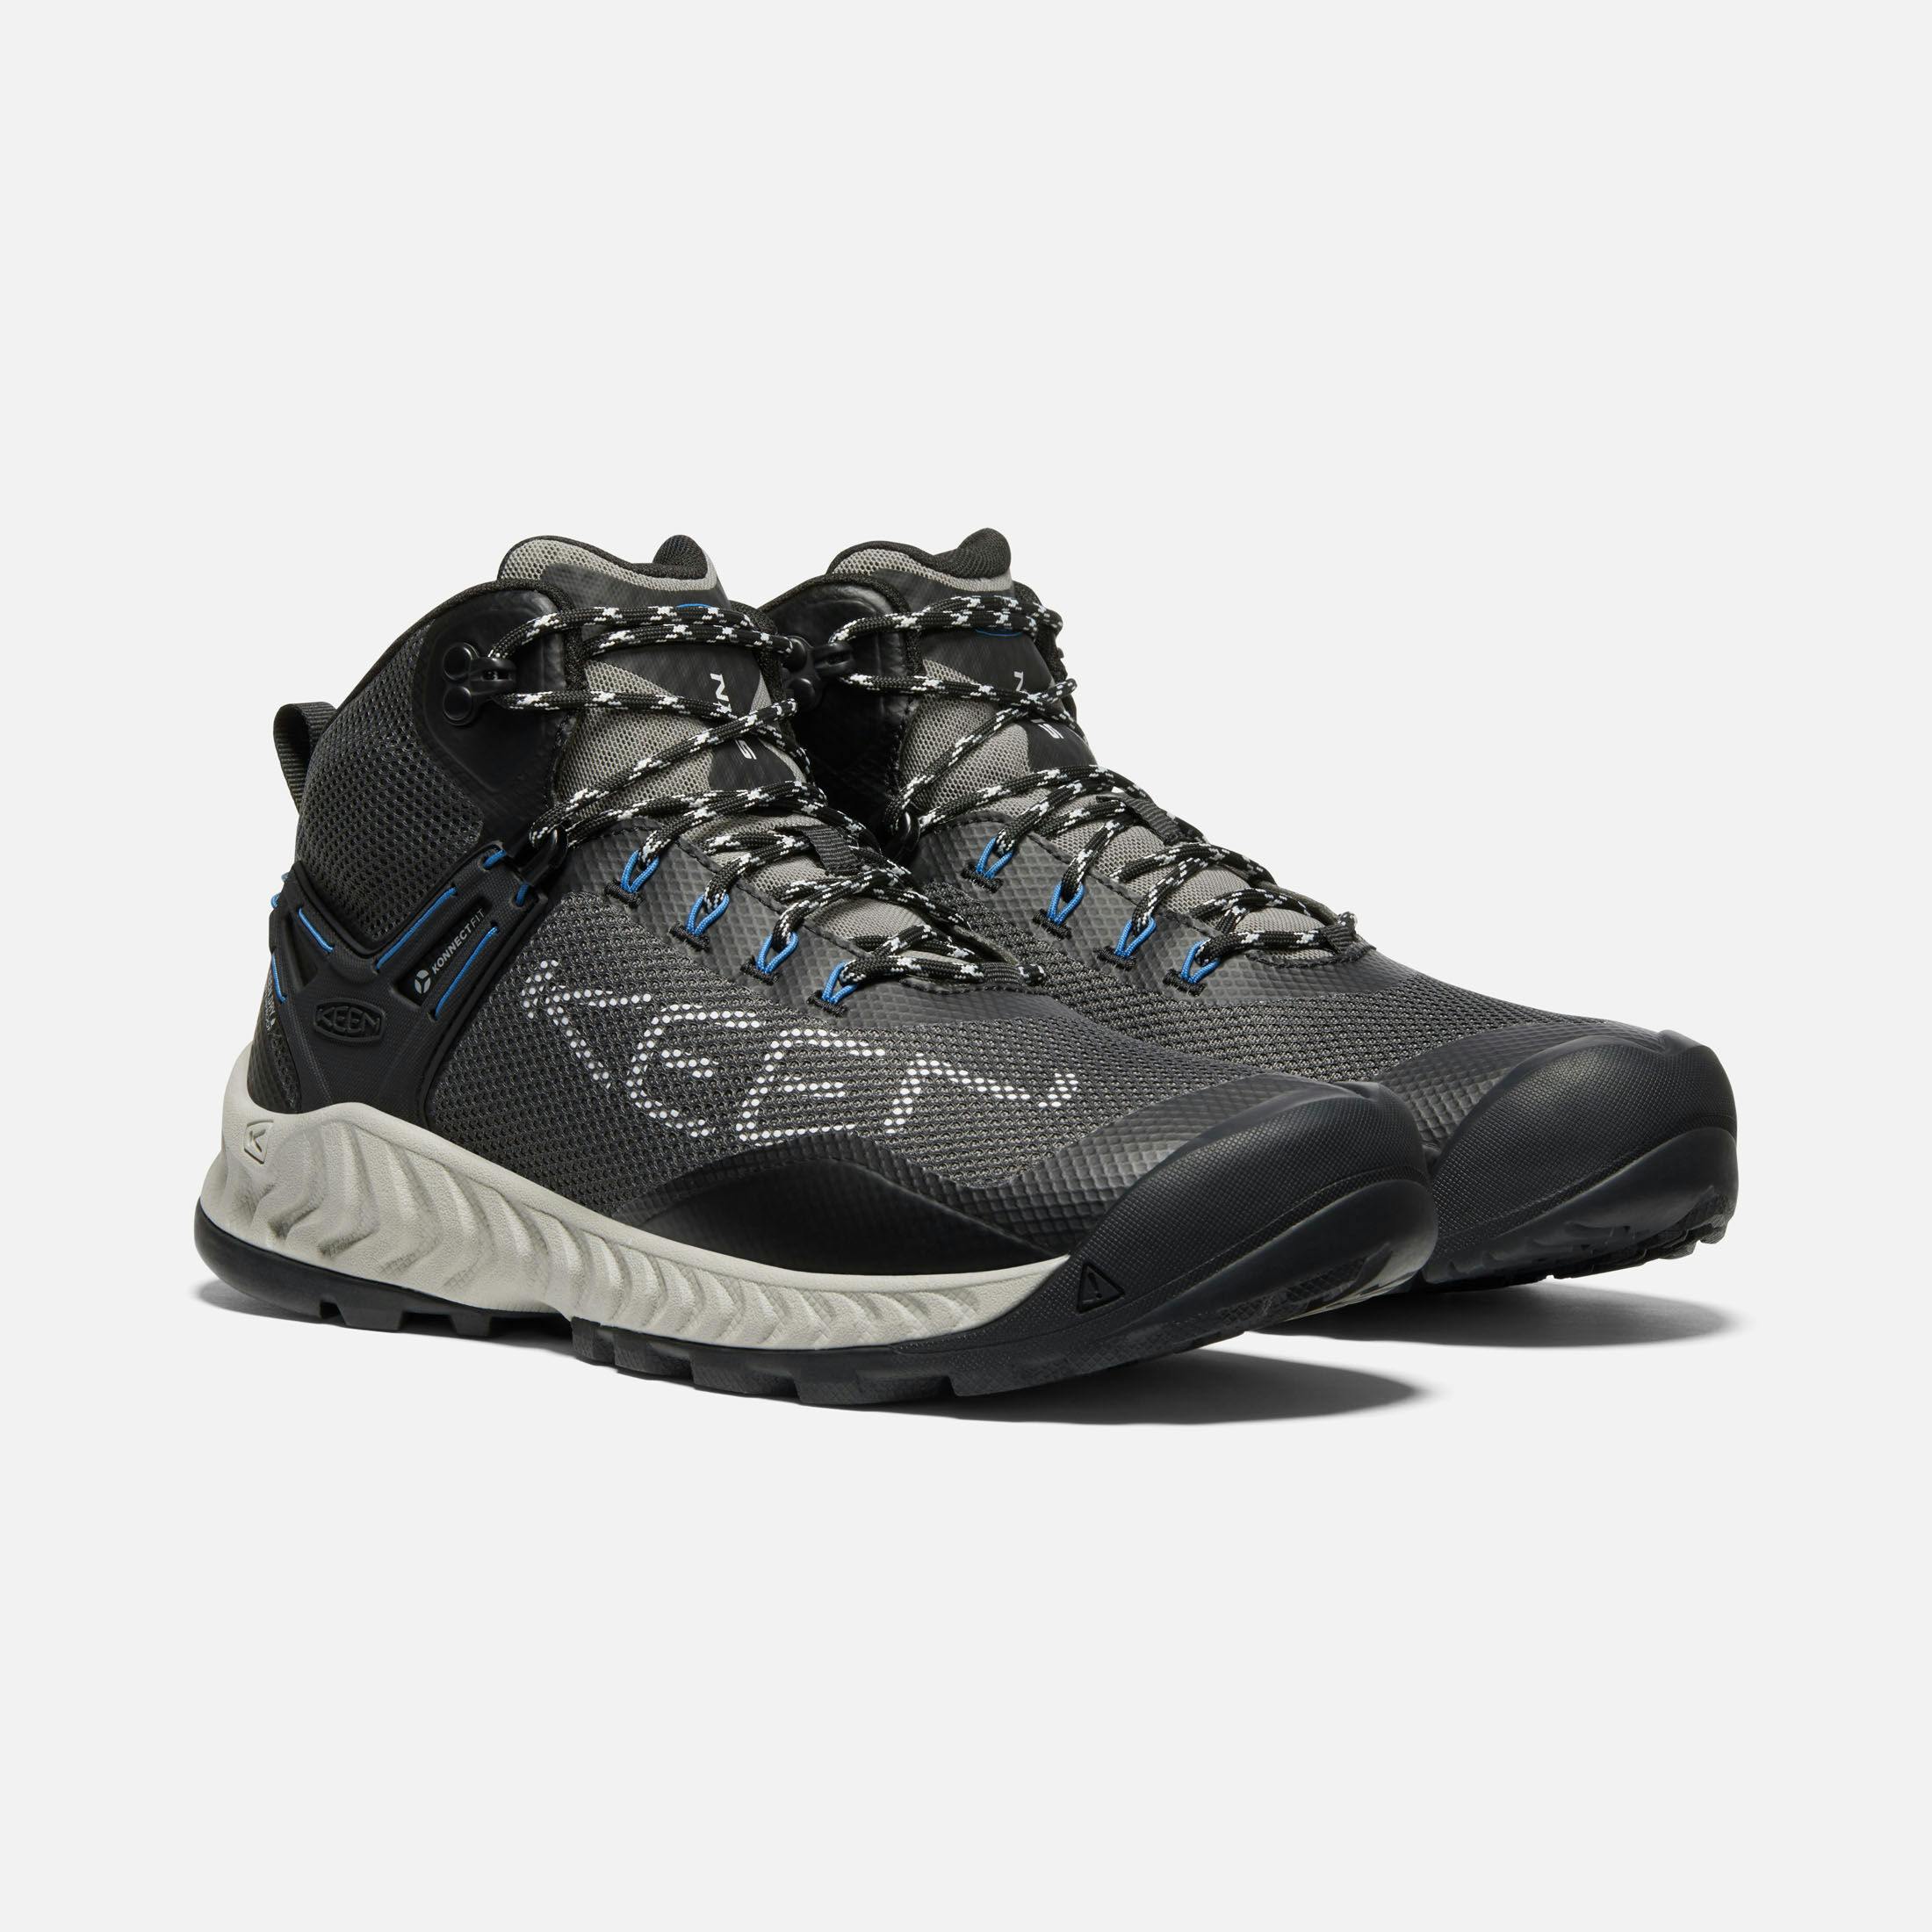 KEEN Men's NXIS EVO Waterproof Mid Hiking Boots